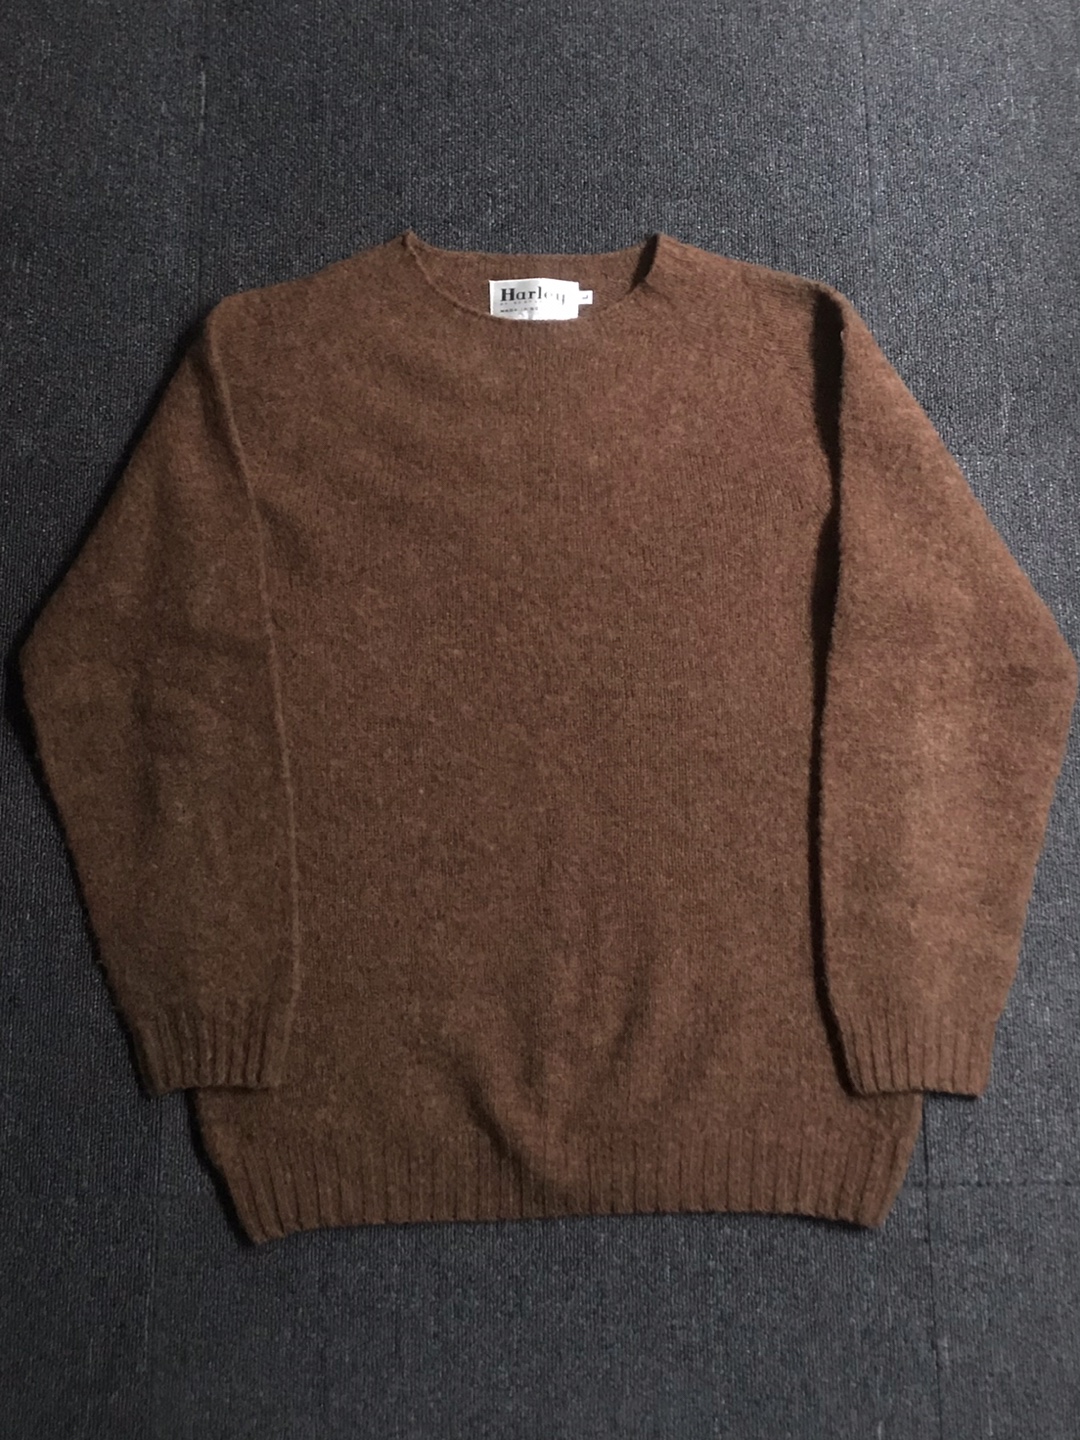 harley of scotland wool crew neck sweater (L size, ~103 추천)